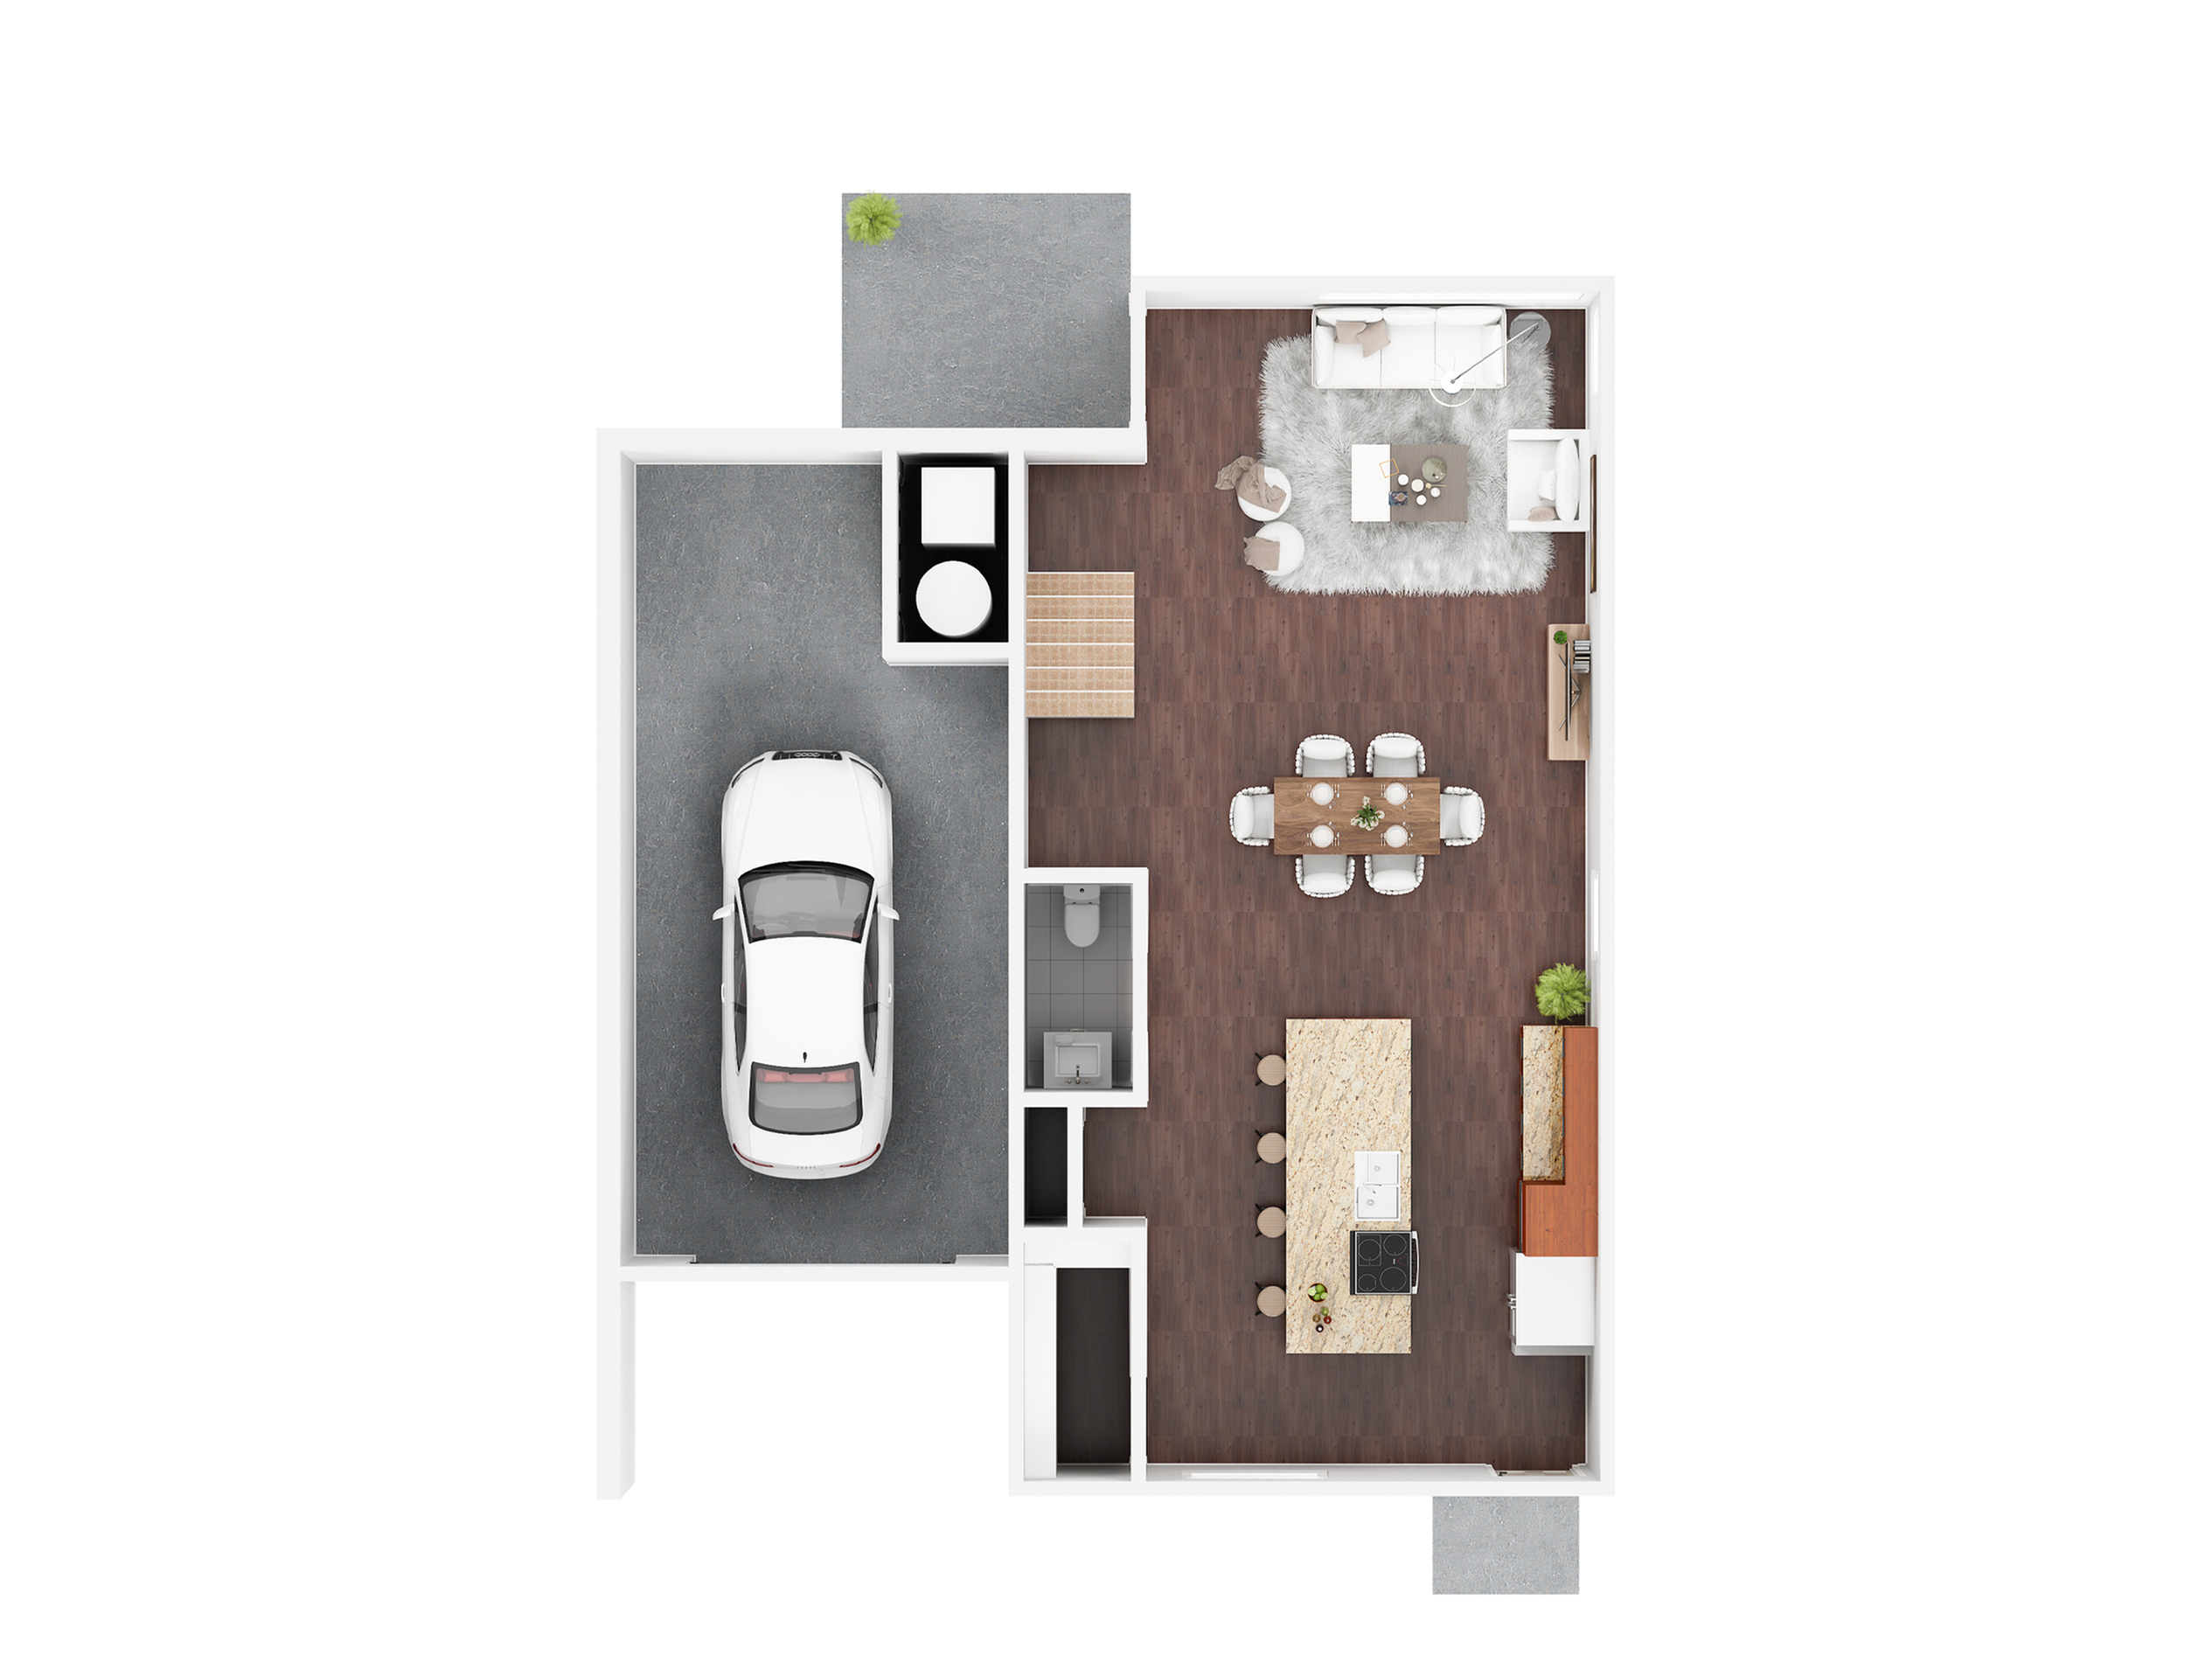 1st Floor - 2 bdrm apartment floor plan at 5Fifty5